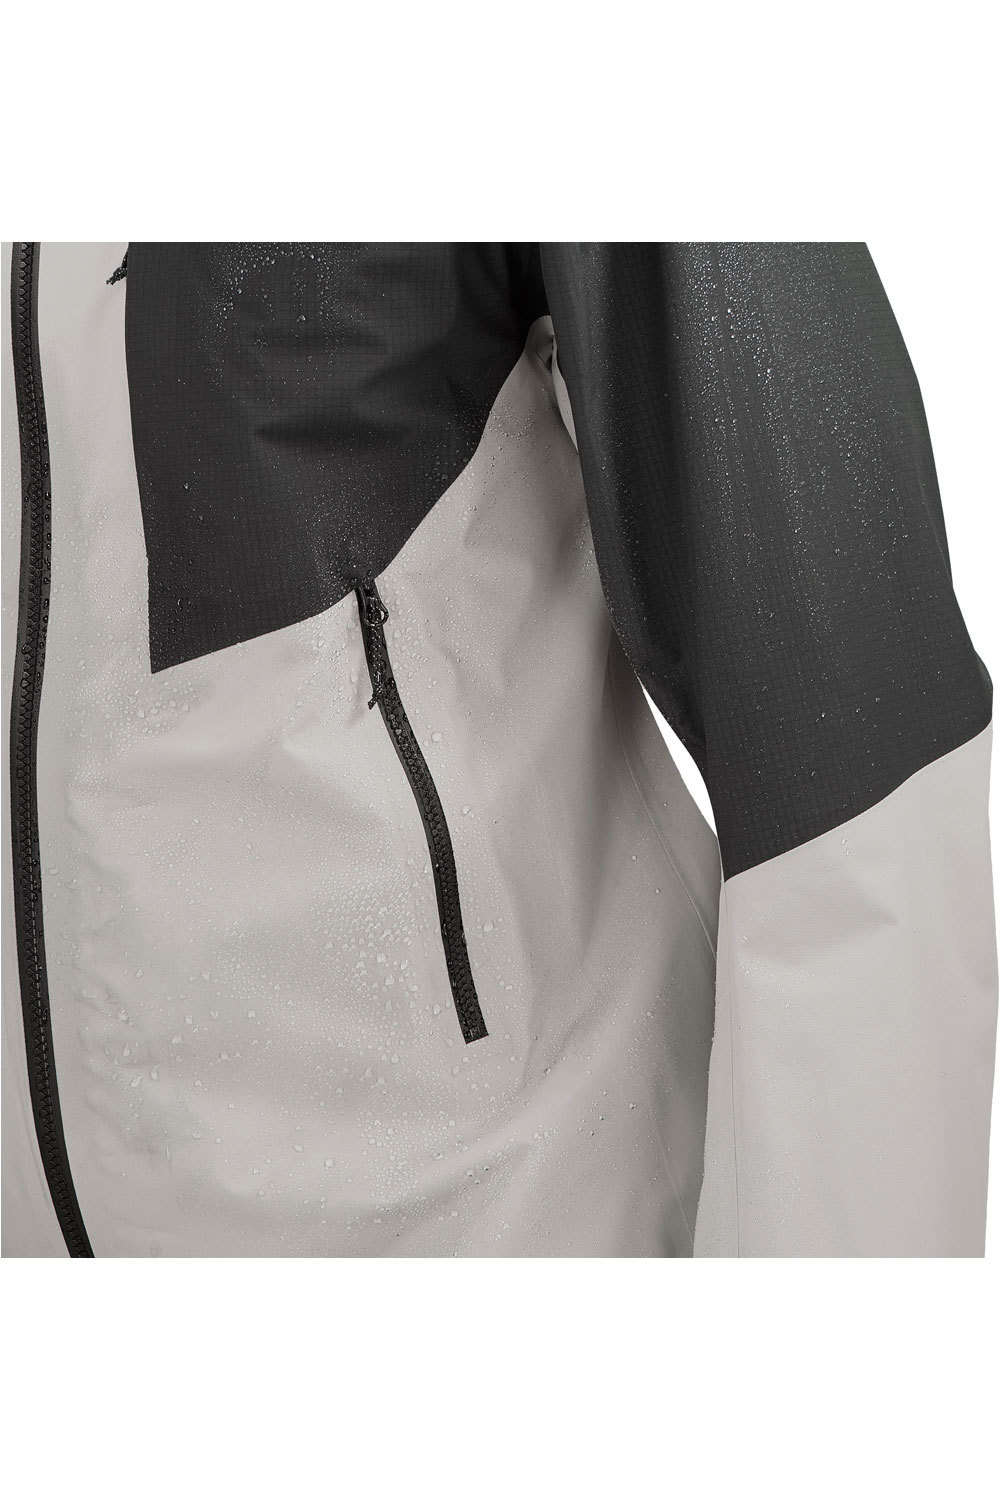 Salomon chaqueta outdoor hombre OUTLINE GTX HYBRID JKT M 07